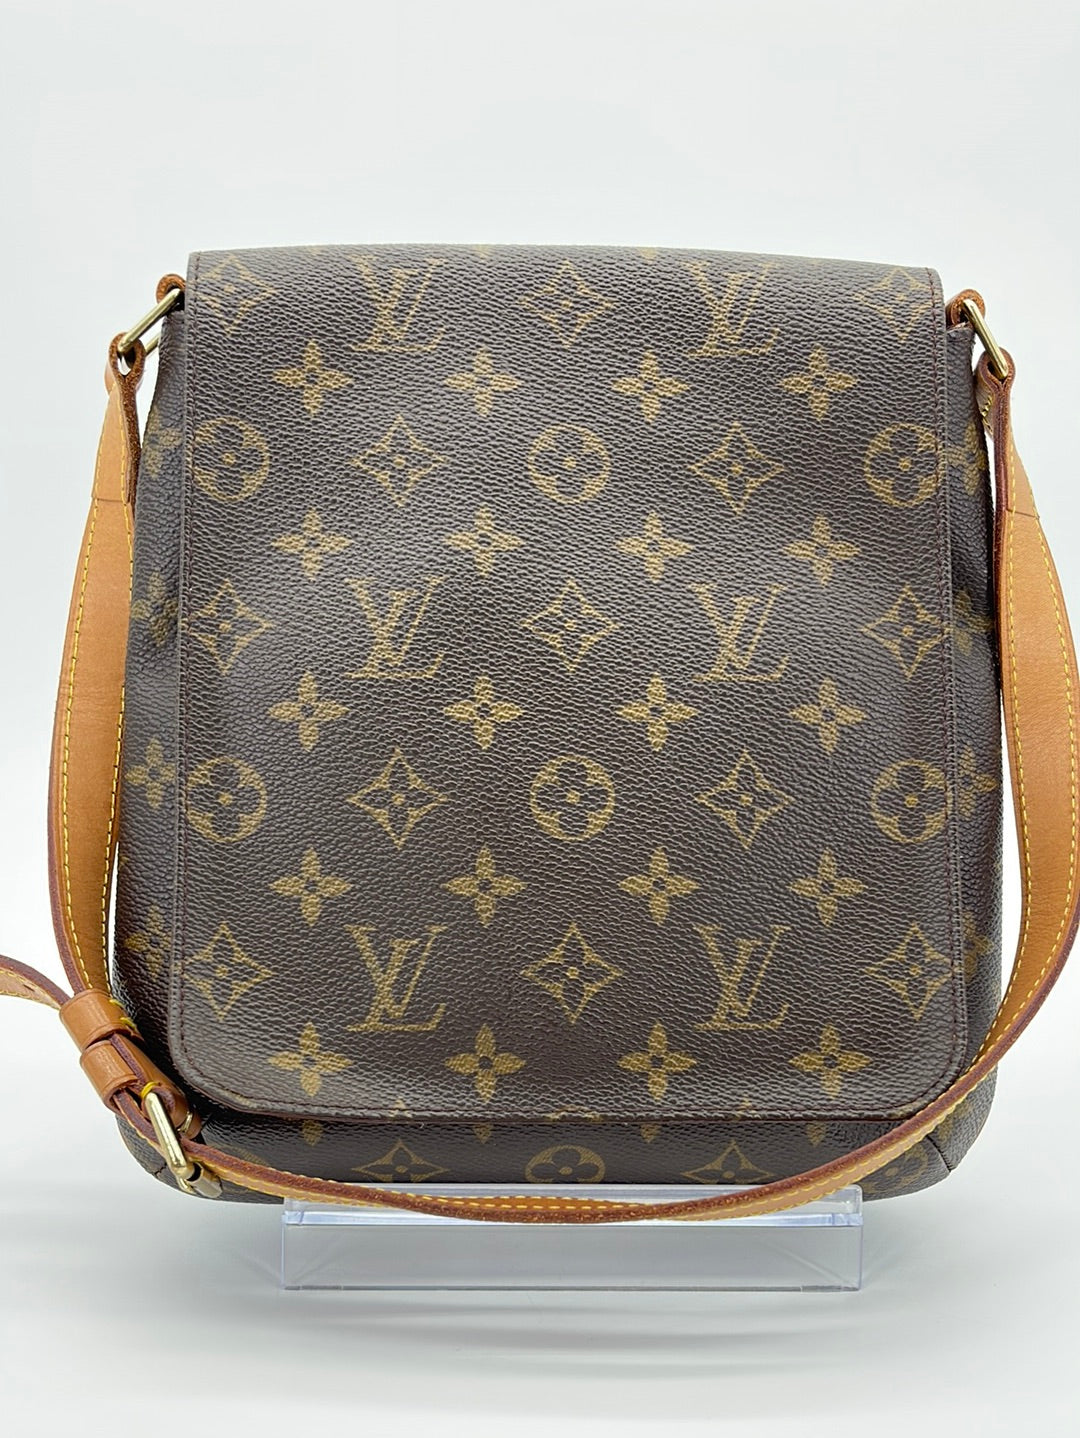 Louis+Vuitton+Musette+Salsa+Shoulder+Bag+Brown+Leather for sale online